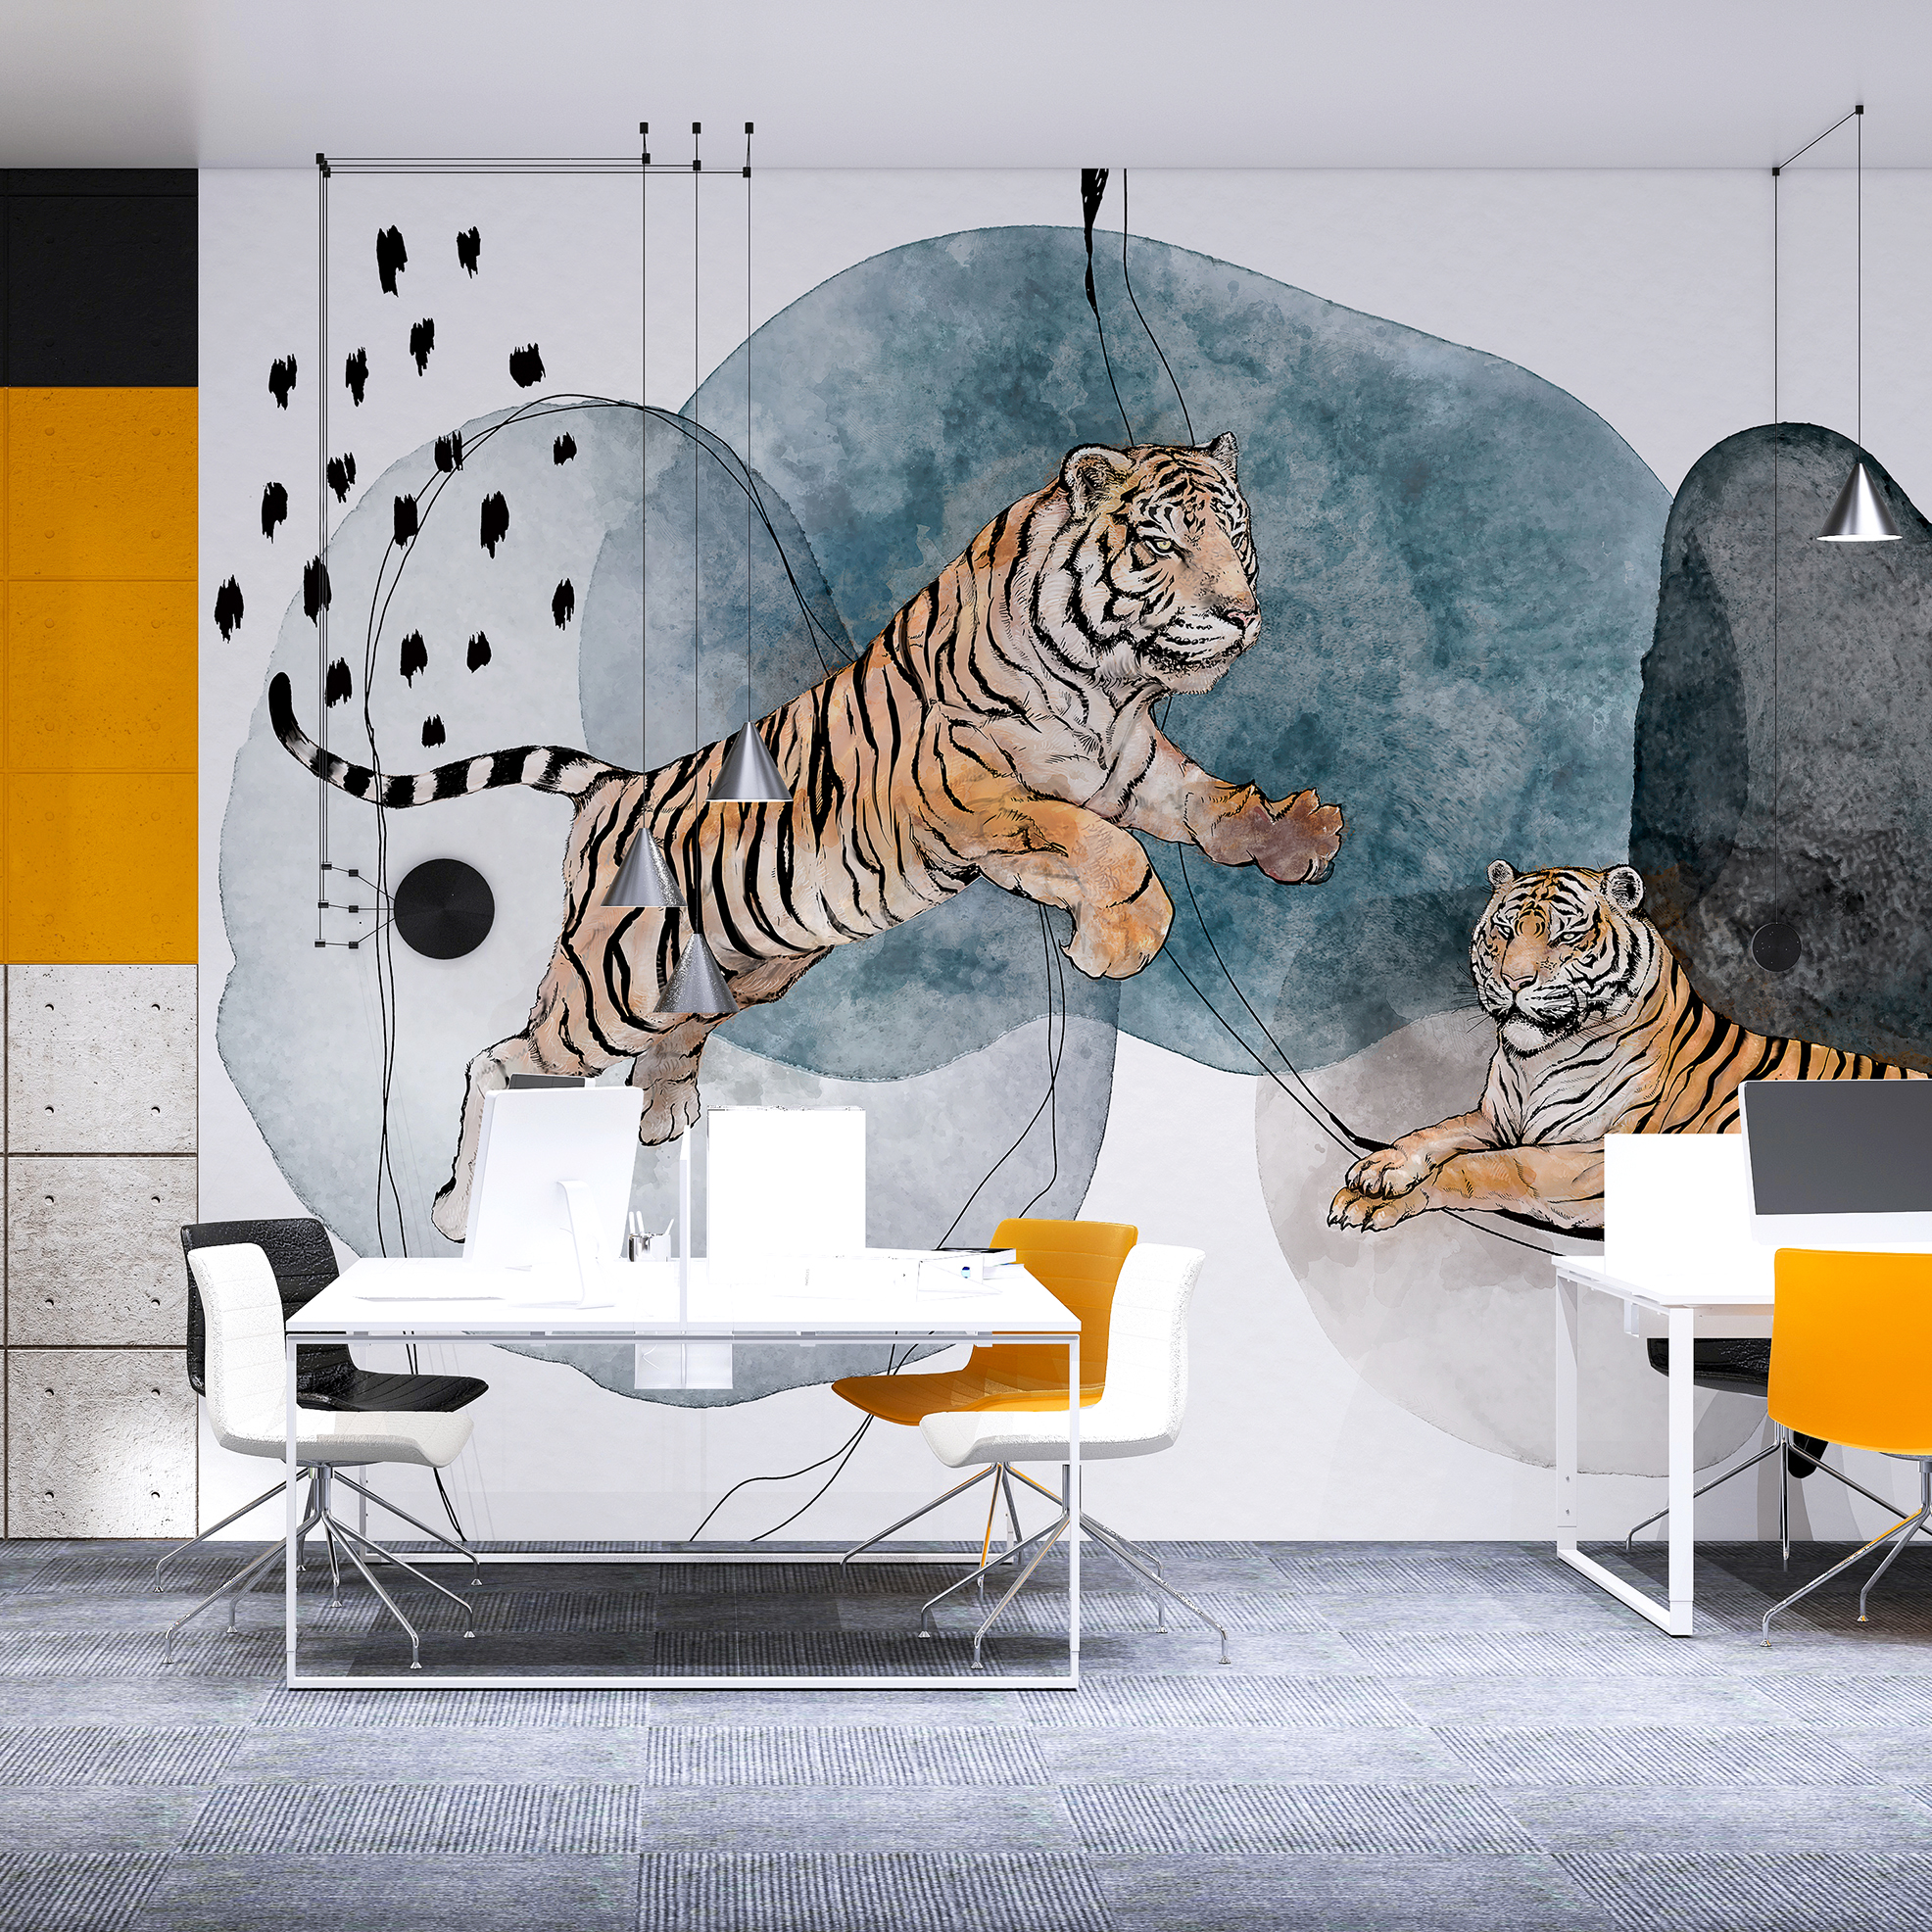 Tiger wallpaper according to Salvador Dali